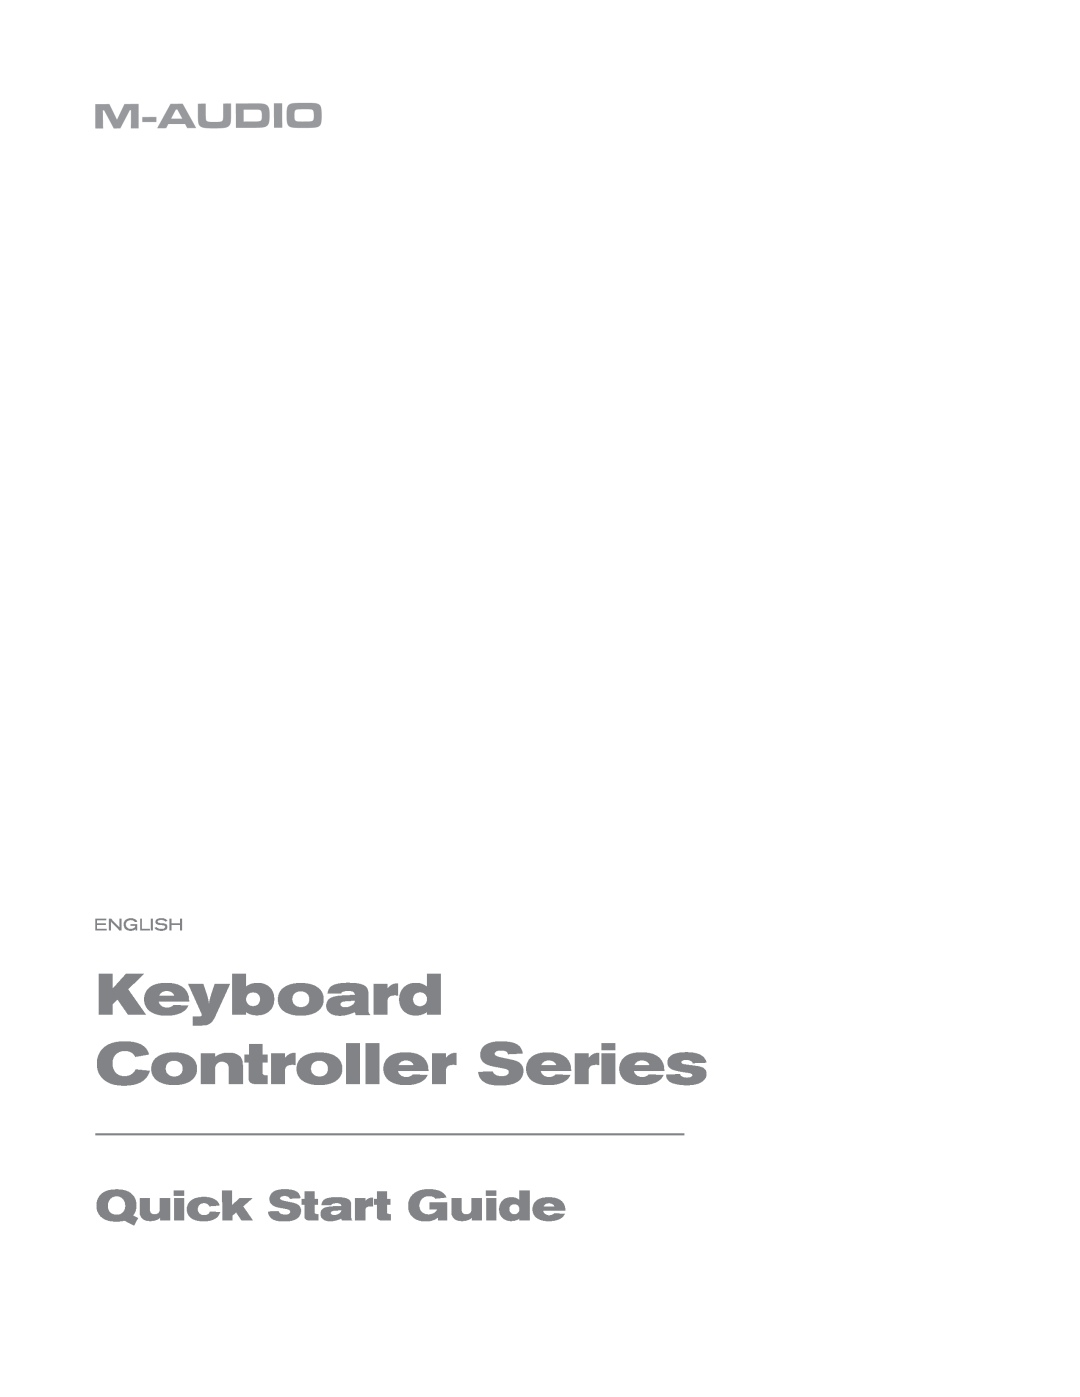 M-Audio quick start Keyboard Controller Series, Quick Start Guide 